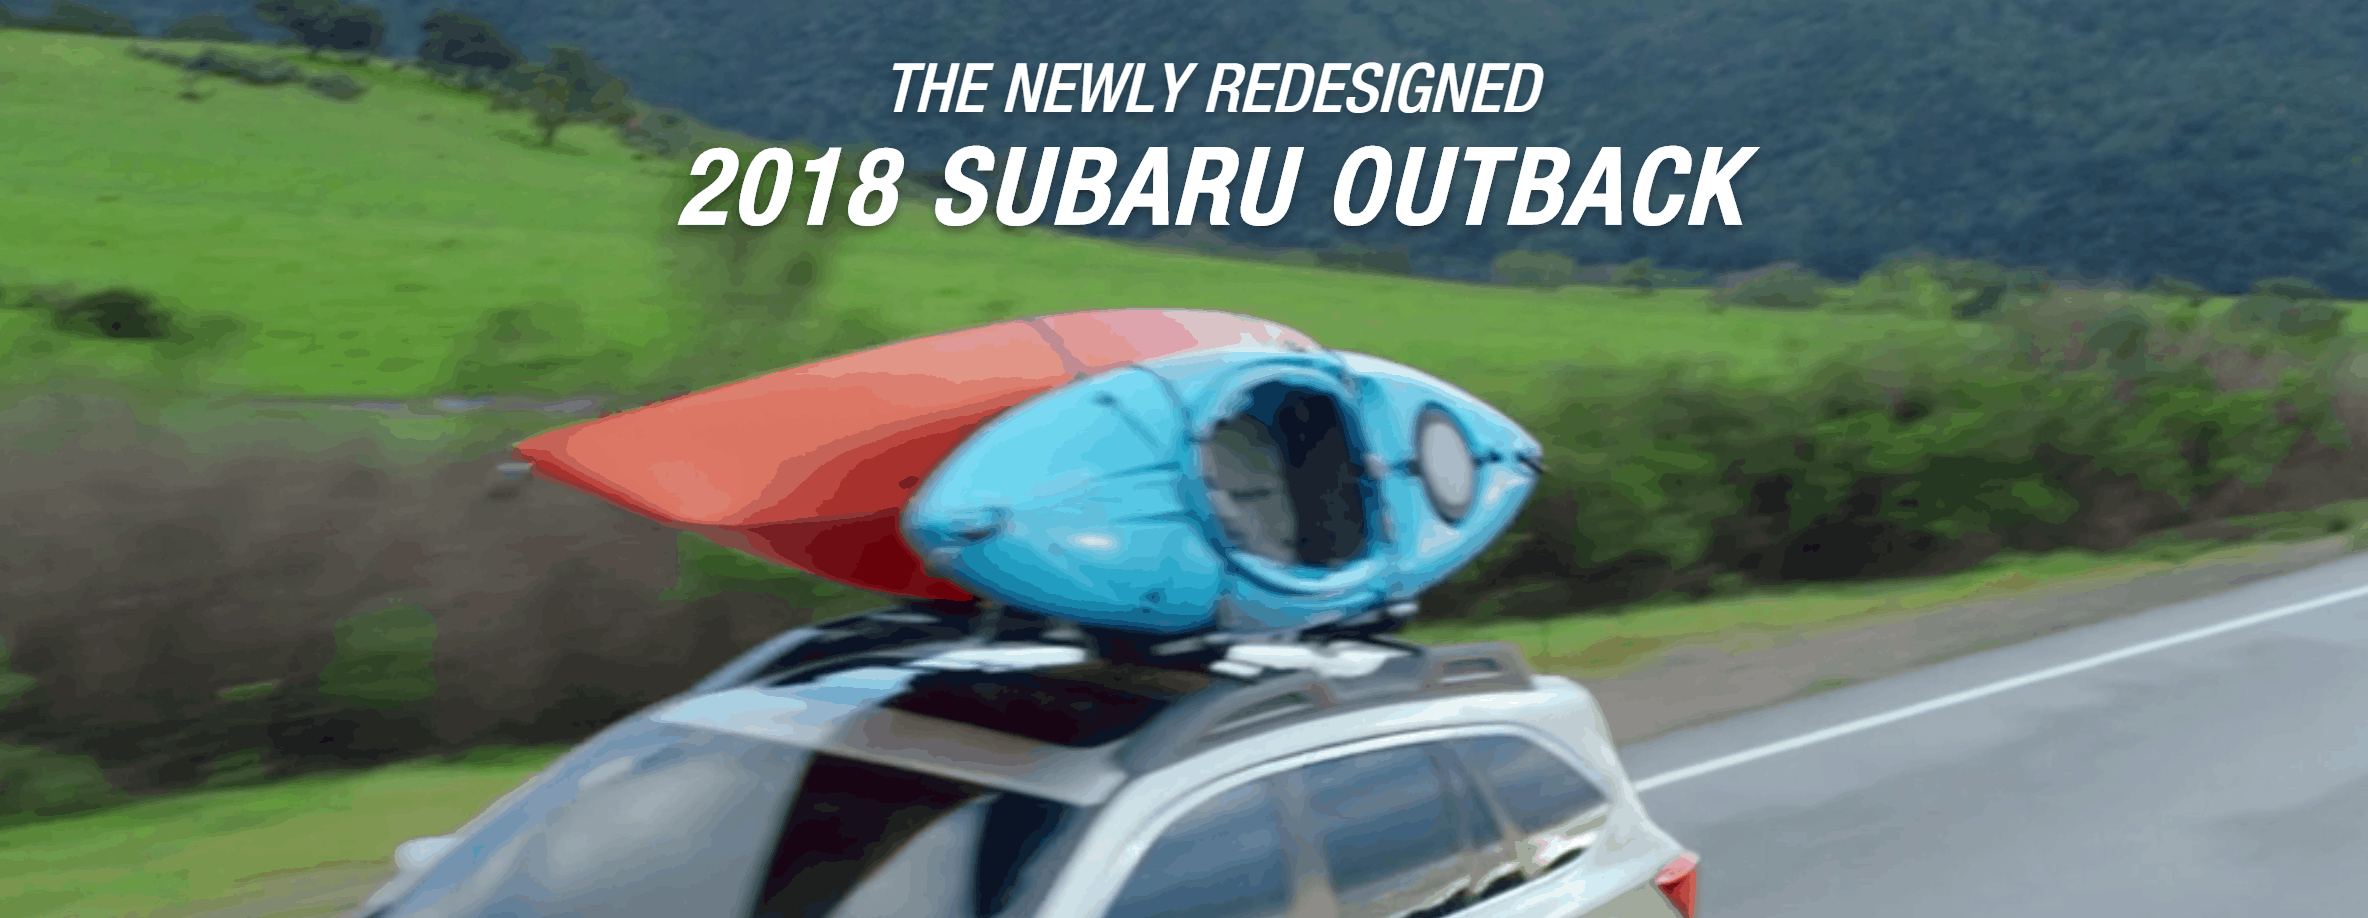 NEW 2018 SUBARU OUTBACK